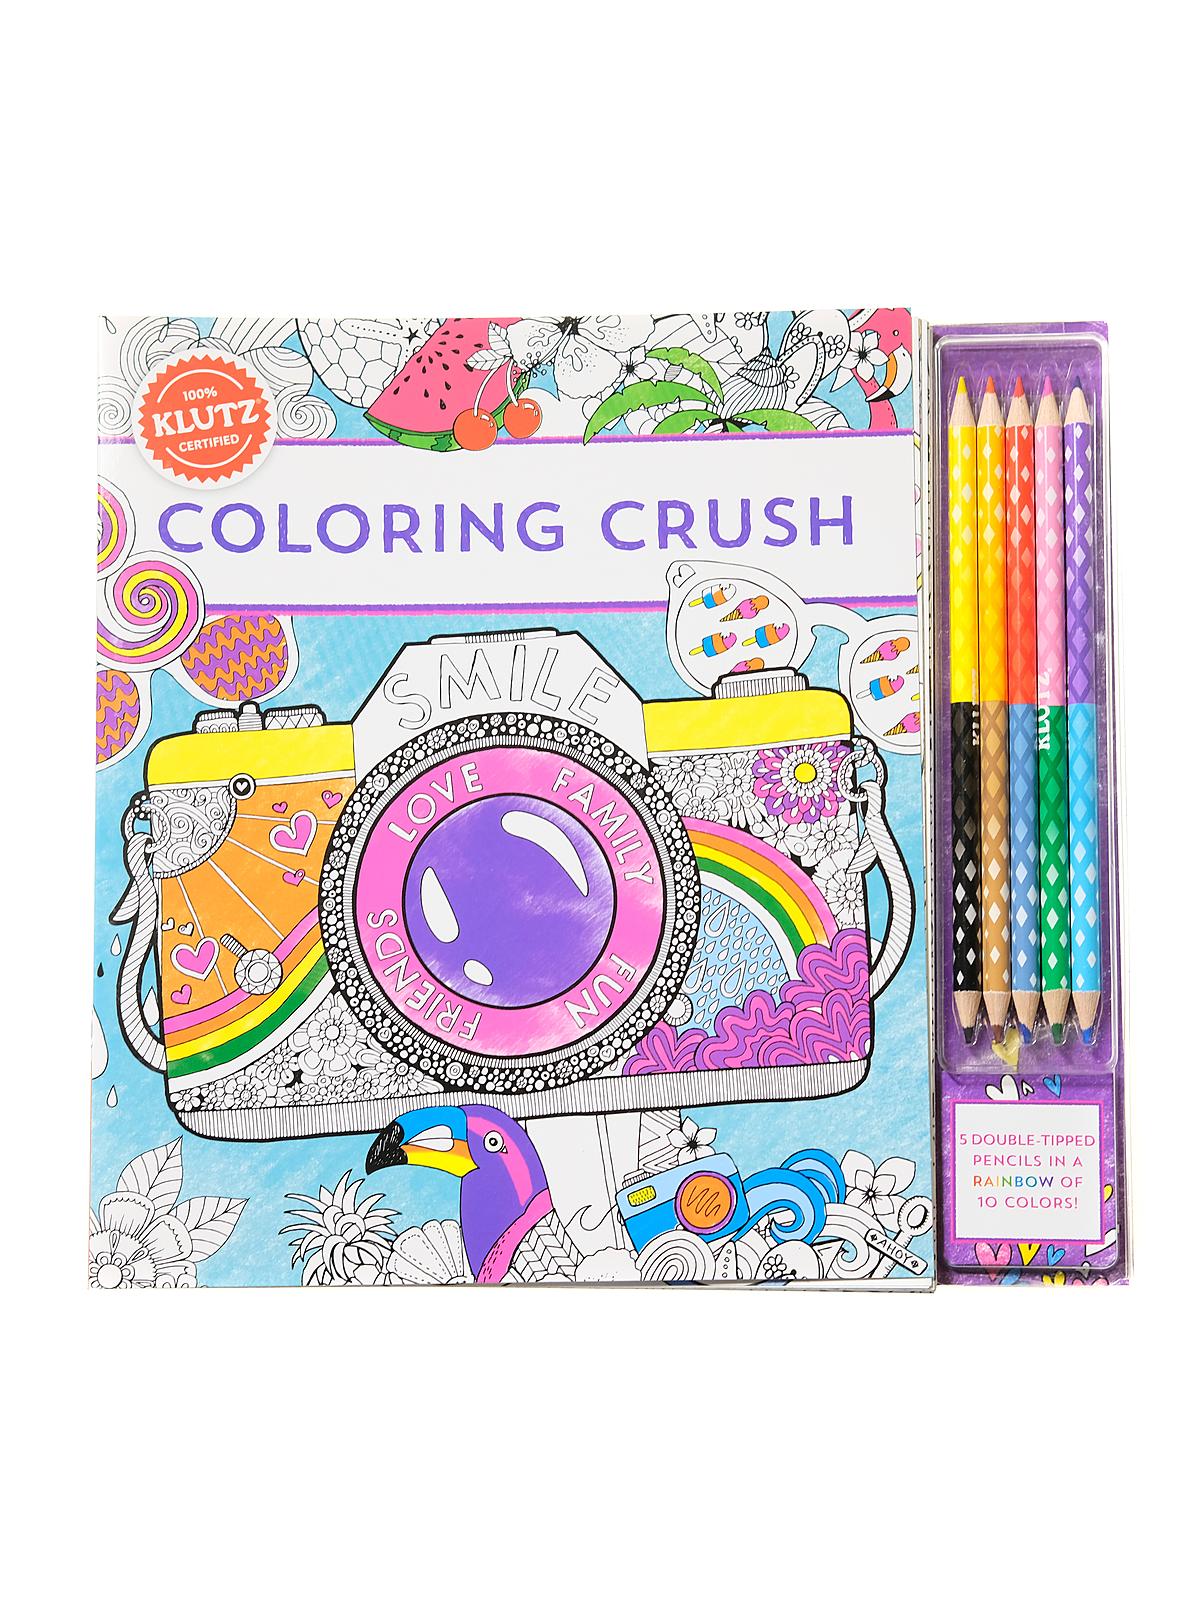 Coloring Crush Each